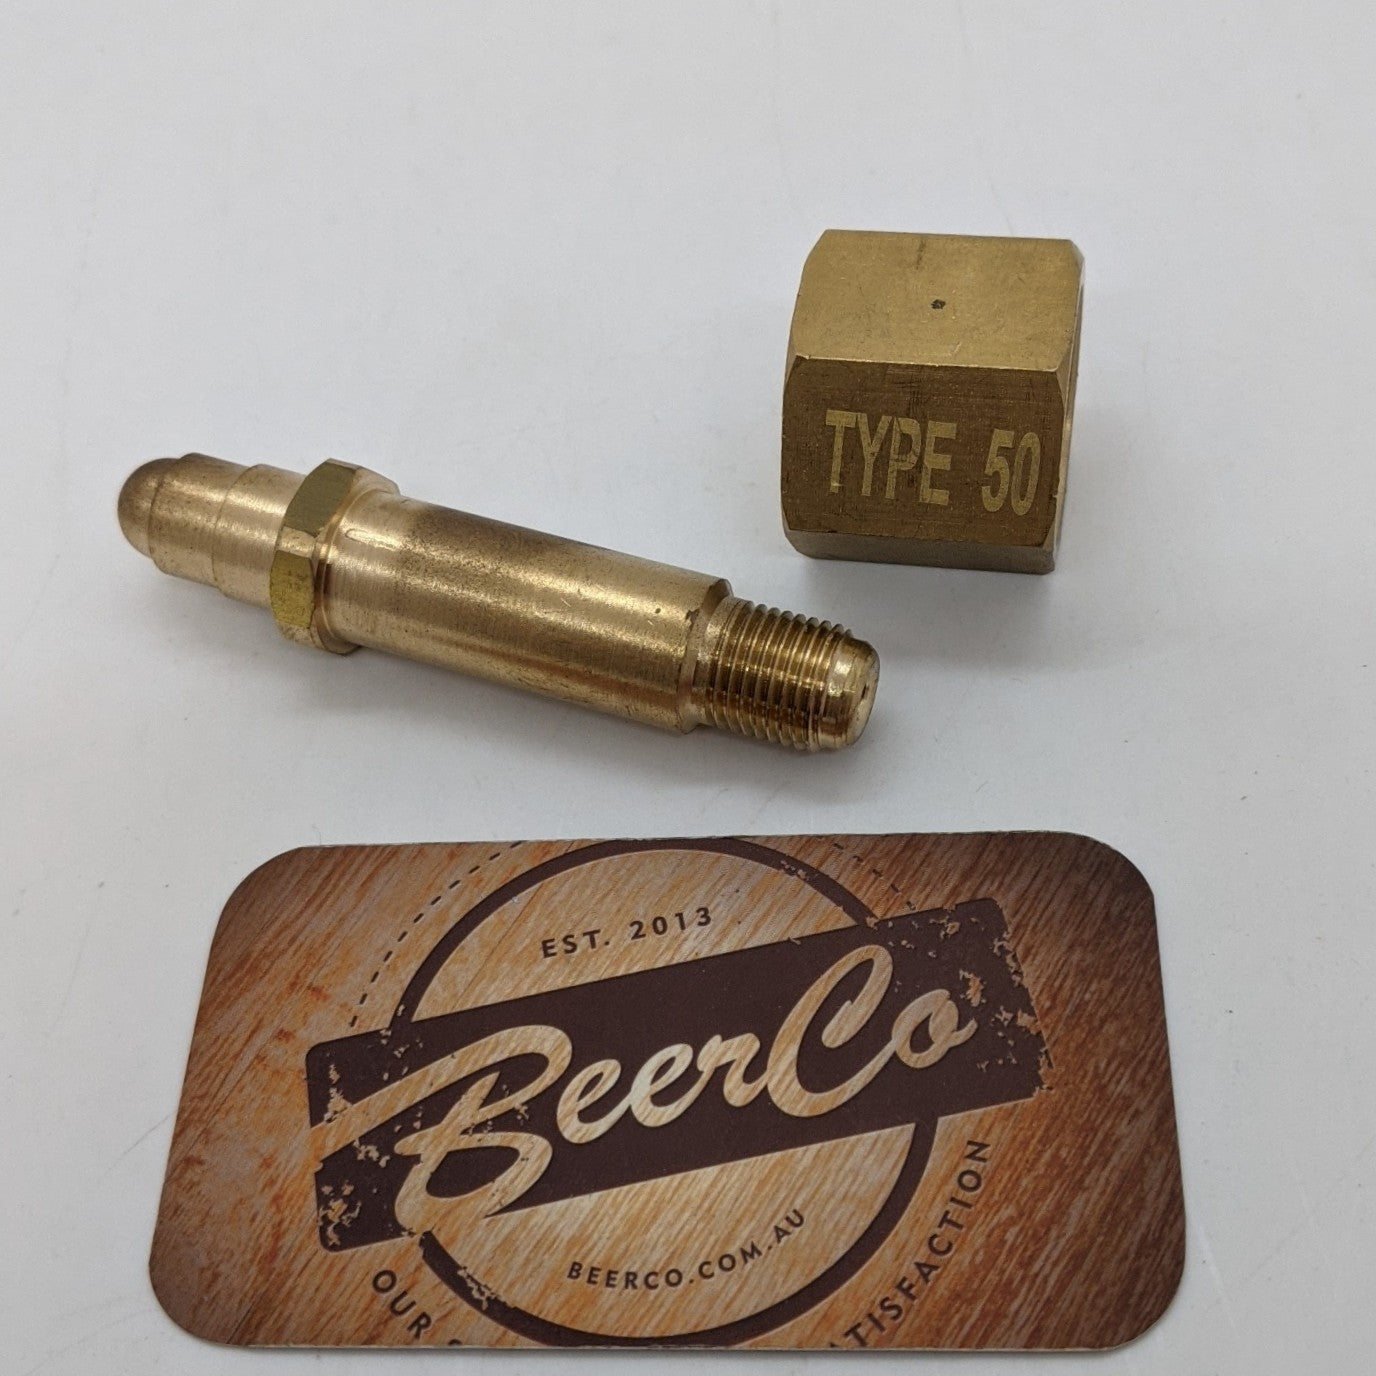 Type 50 | 1/4 inch thread nut & stem - 0